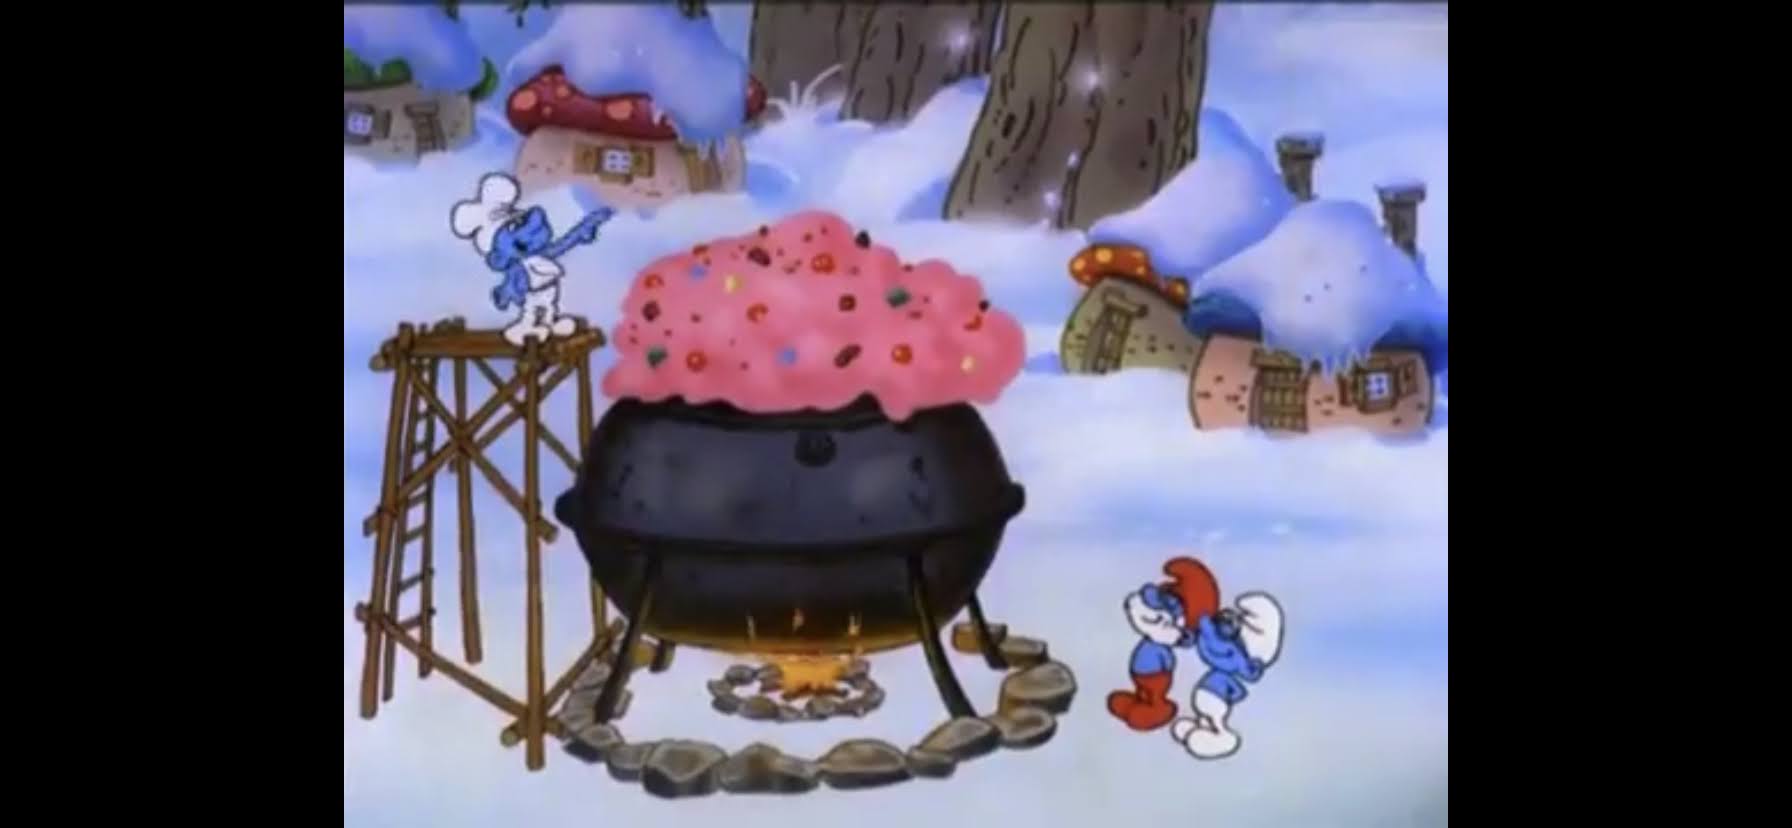 The Smurfs The Smurfette (TV Episode 1981) - IMDb